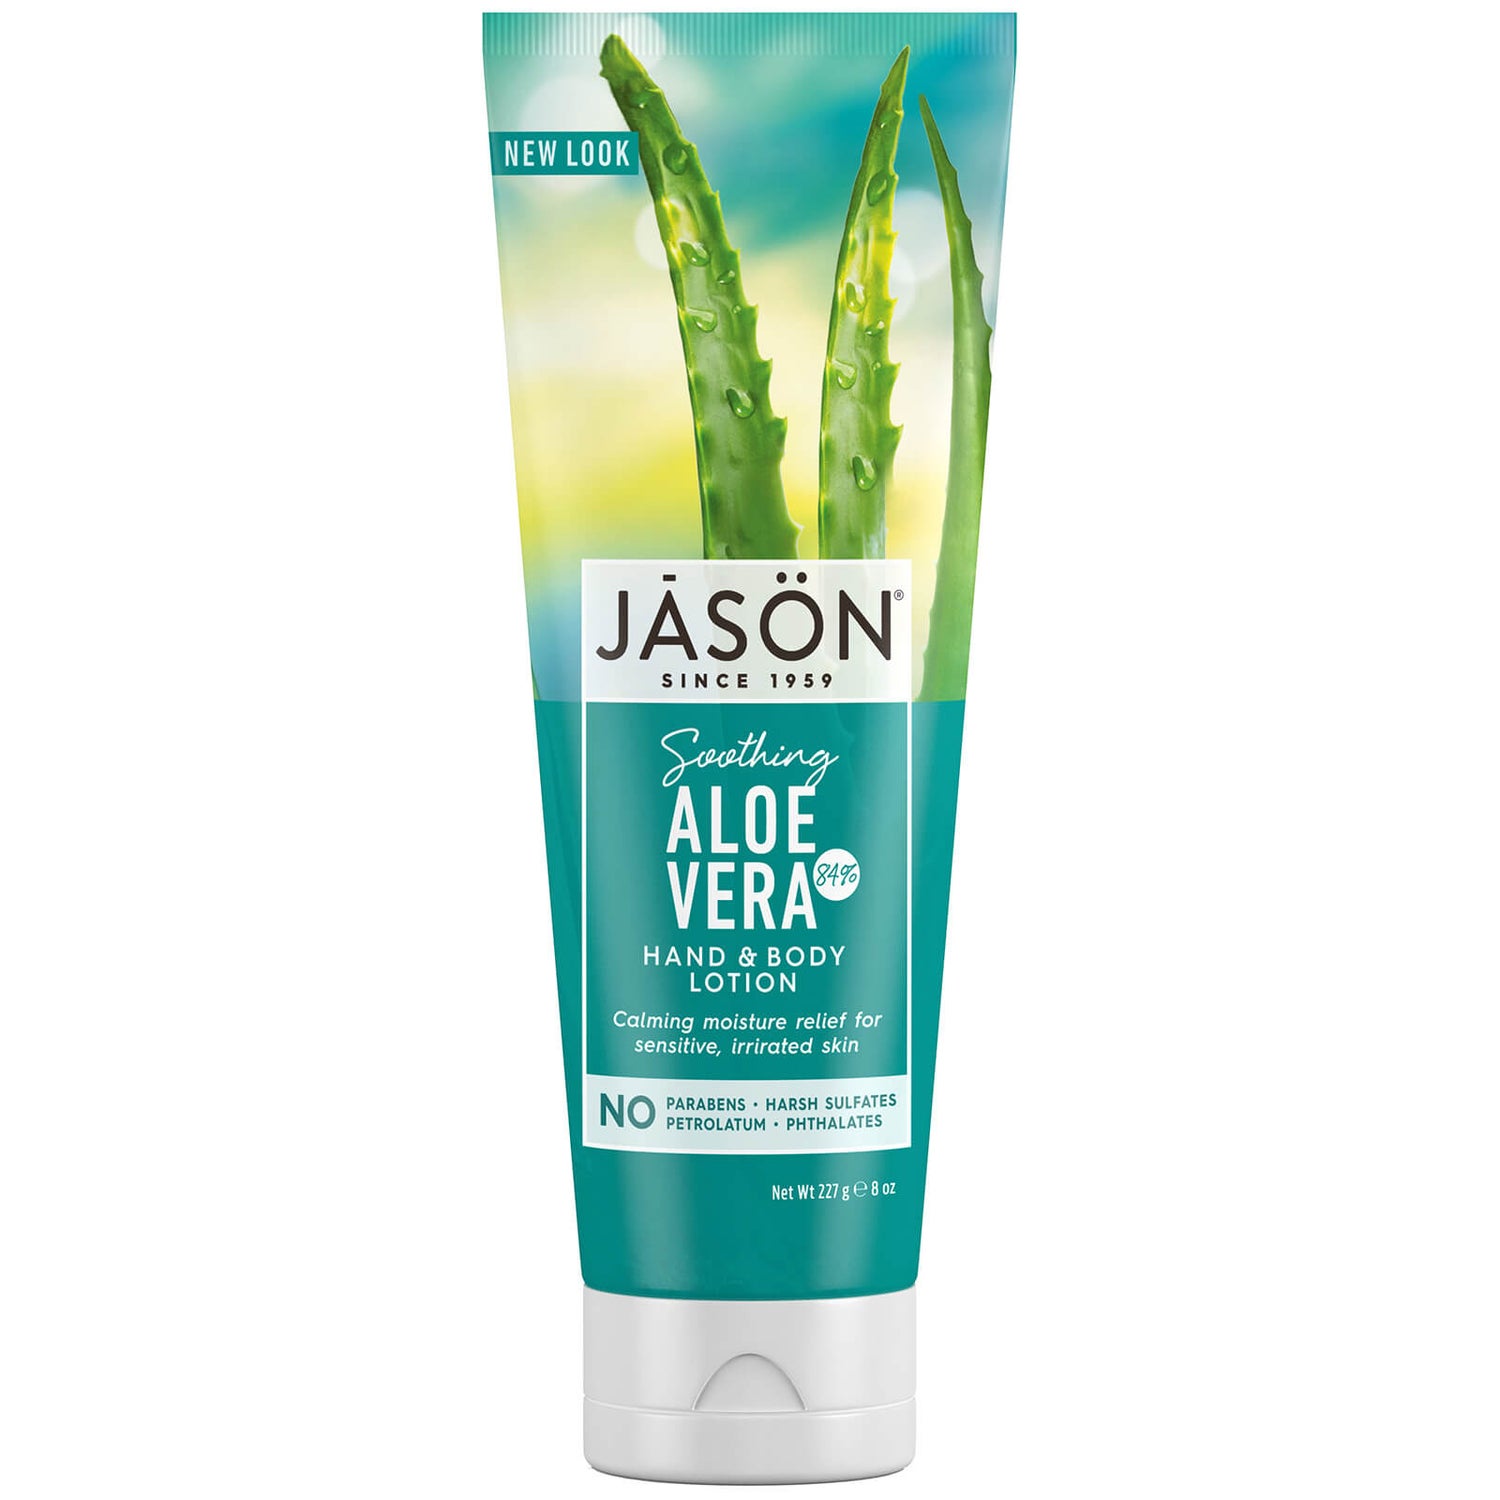 JASON Soothing 84% aloe vera Hand and Body Lotion (227 g)